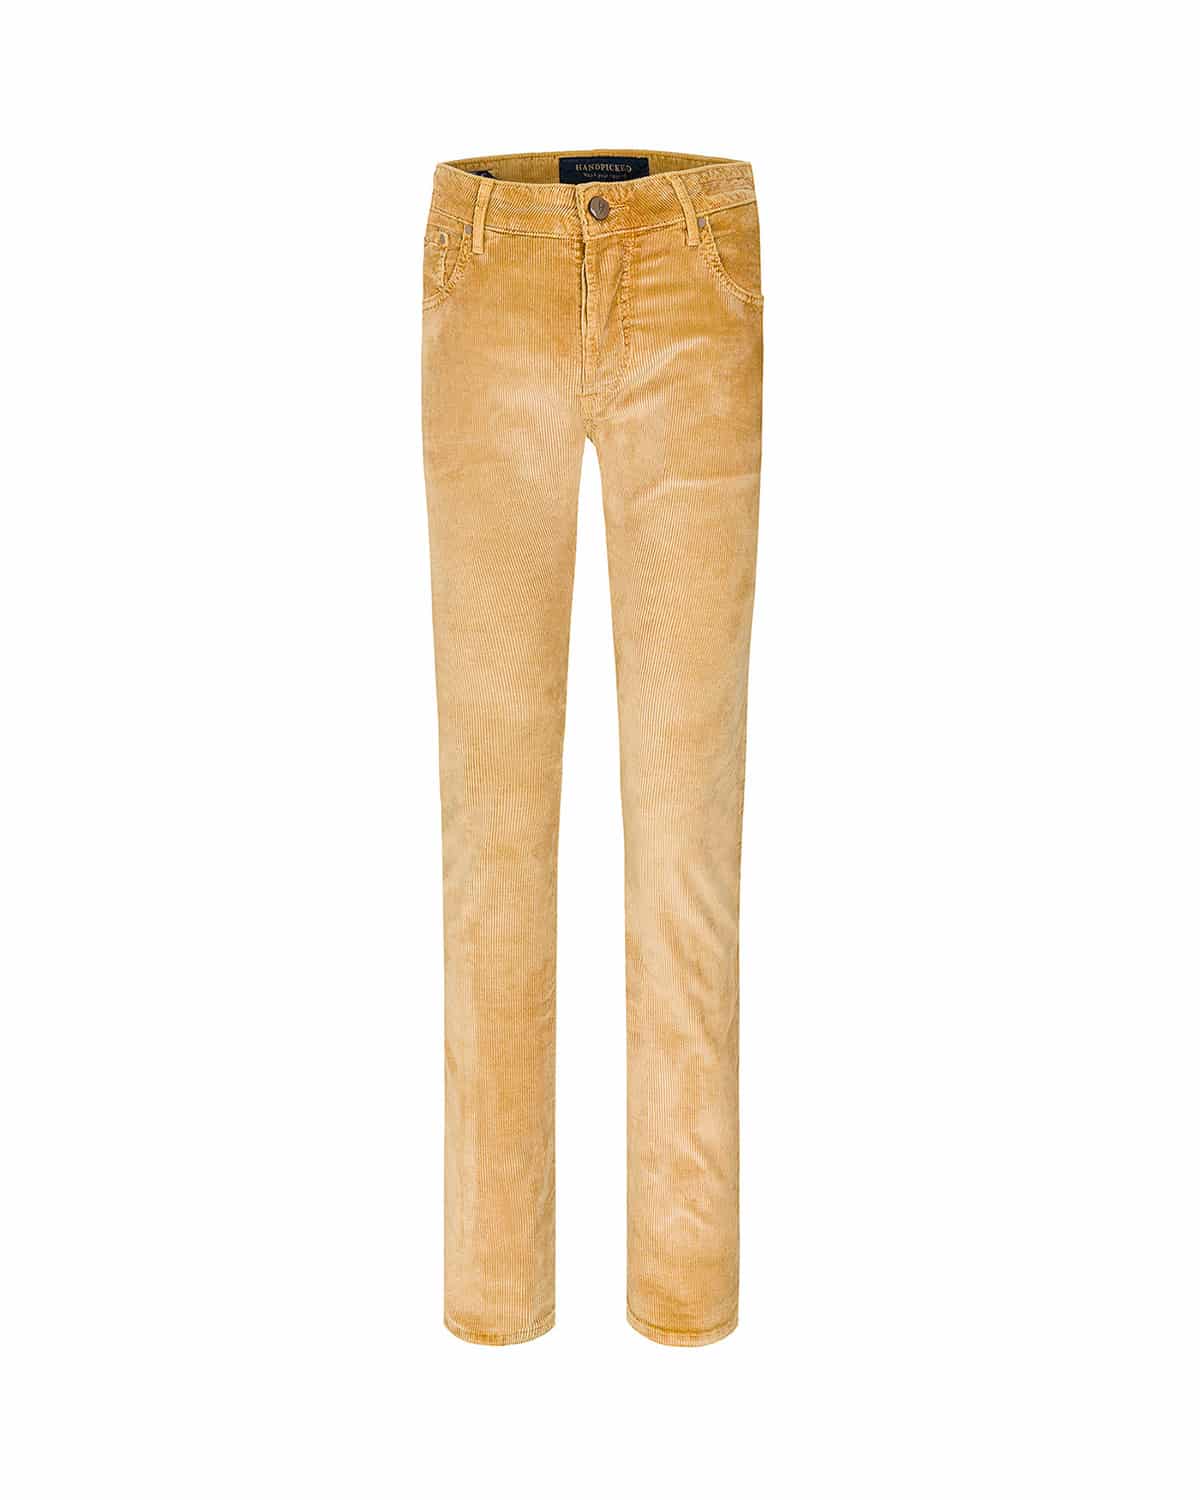 handpicked jeans corduroy beige